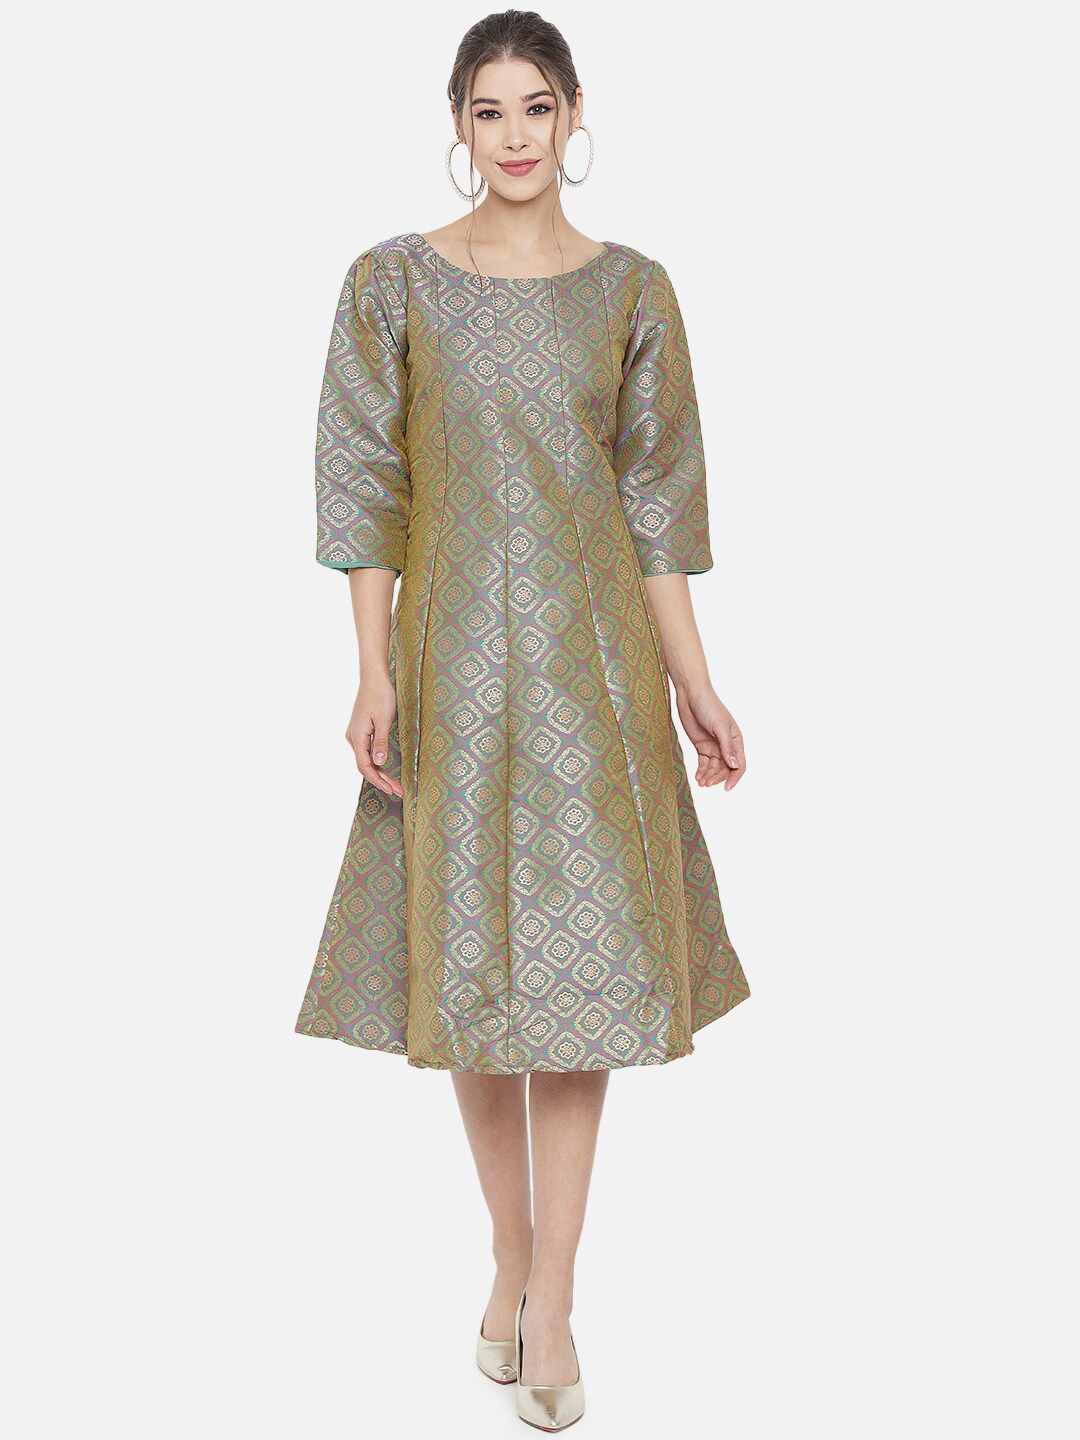 RAISIN Olive Green Jacquard Banarasi Brocade A-Line Dress Price in India